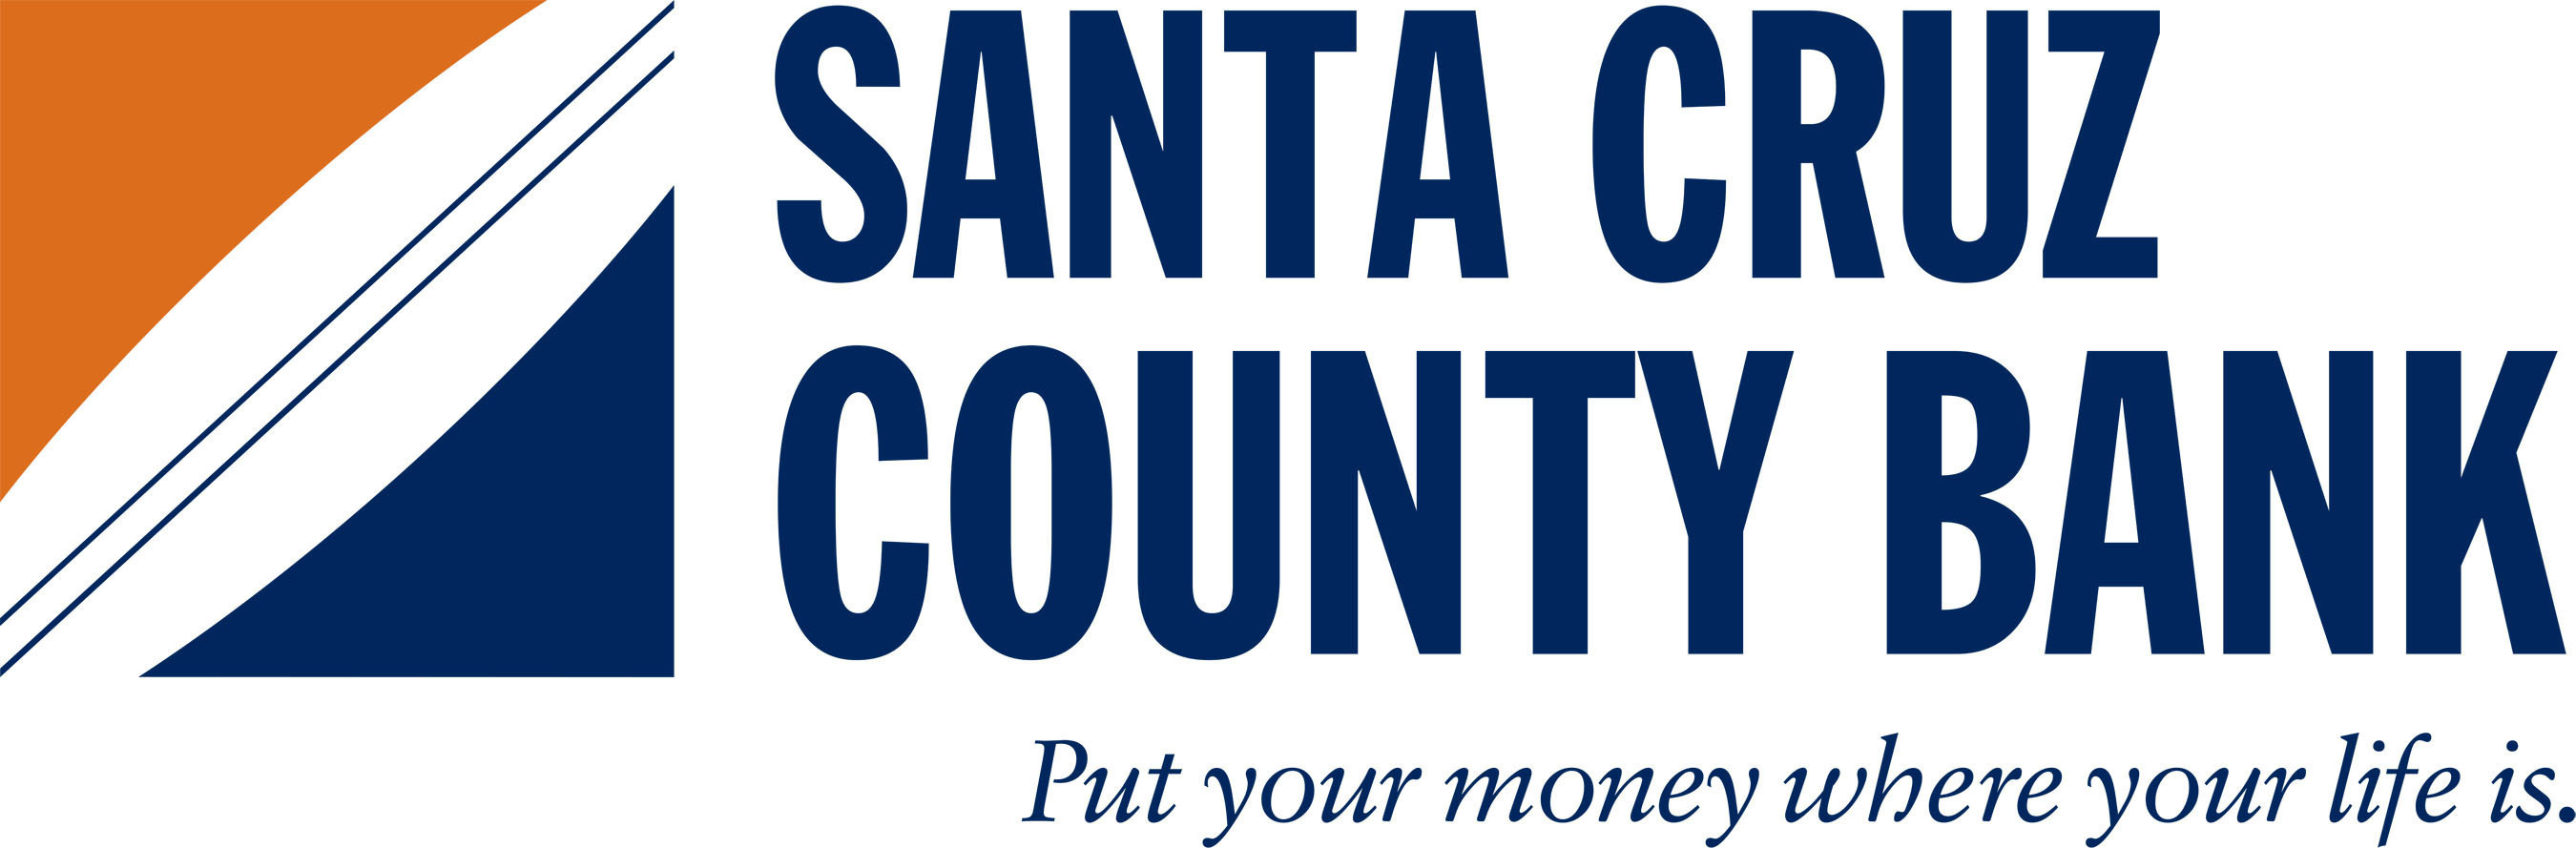 Santa Cruz County Bank logo